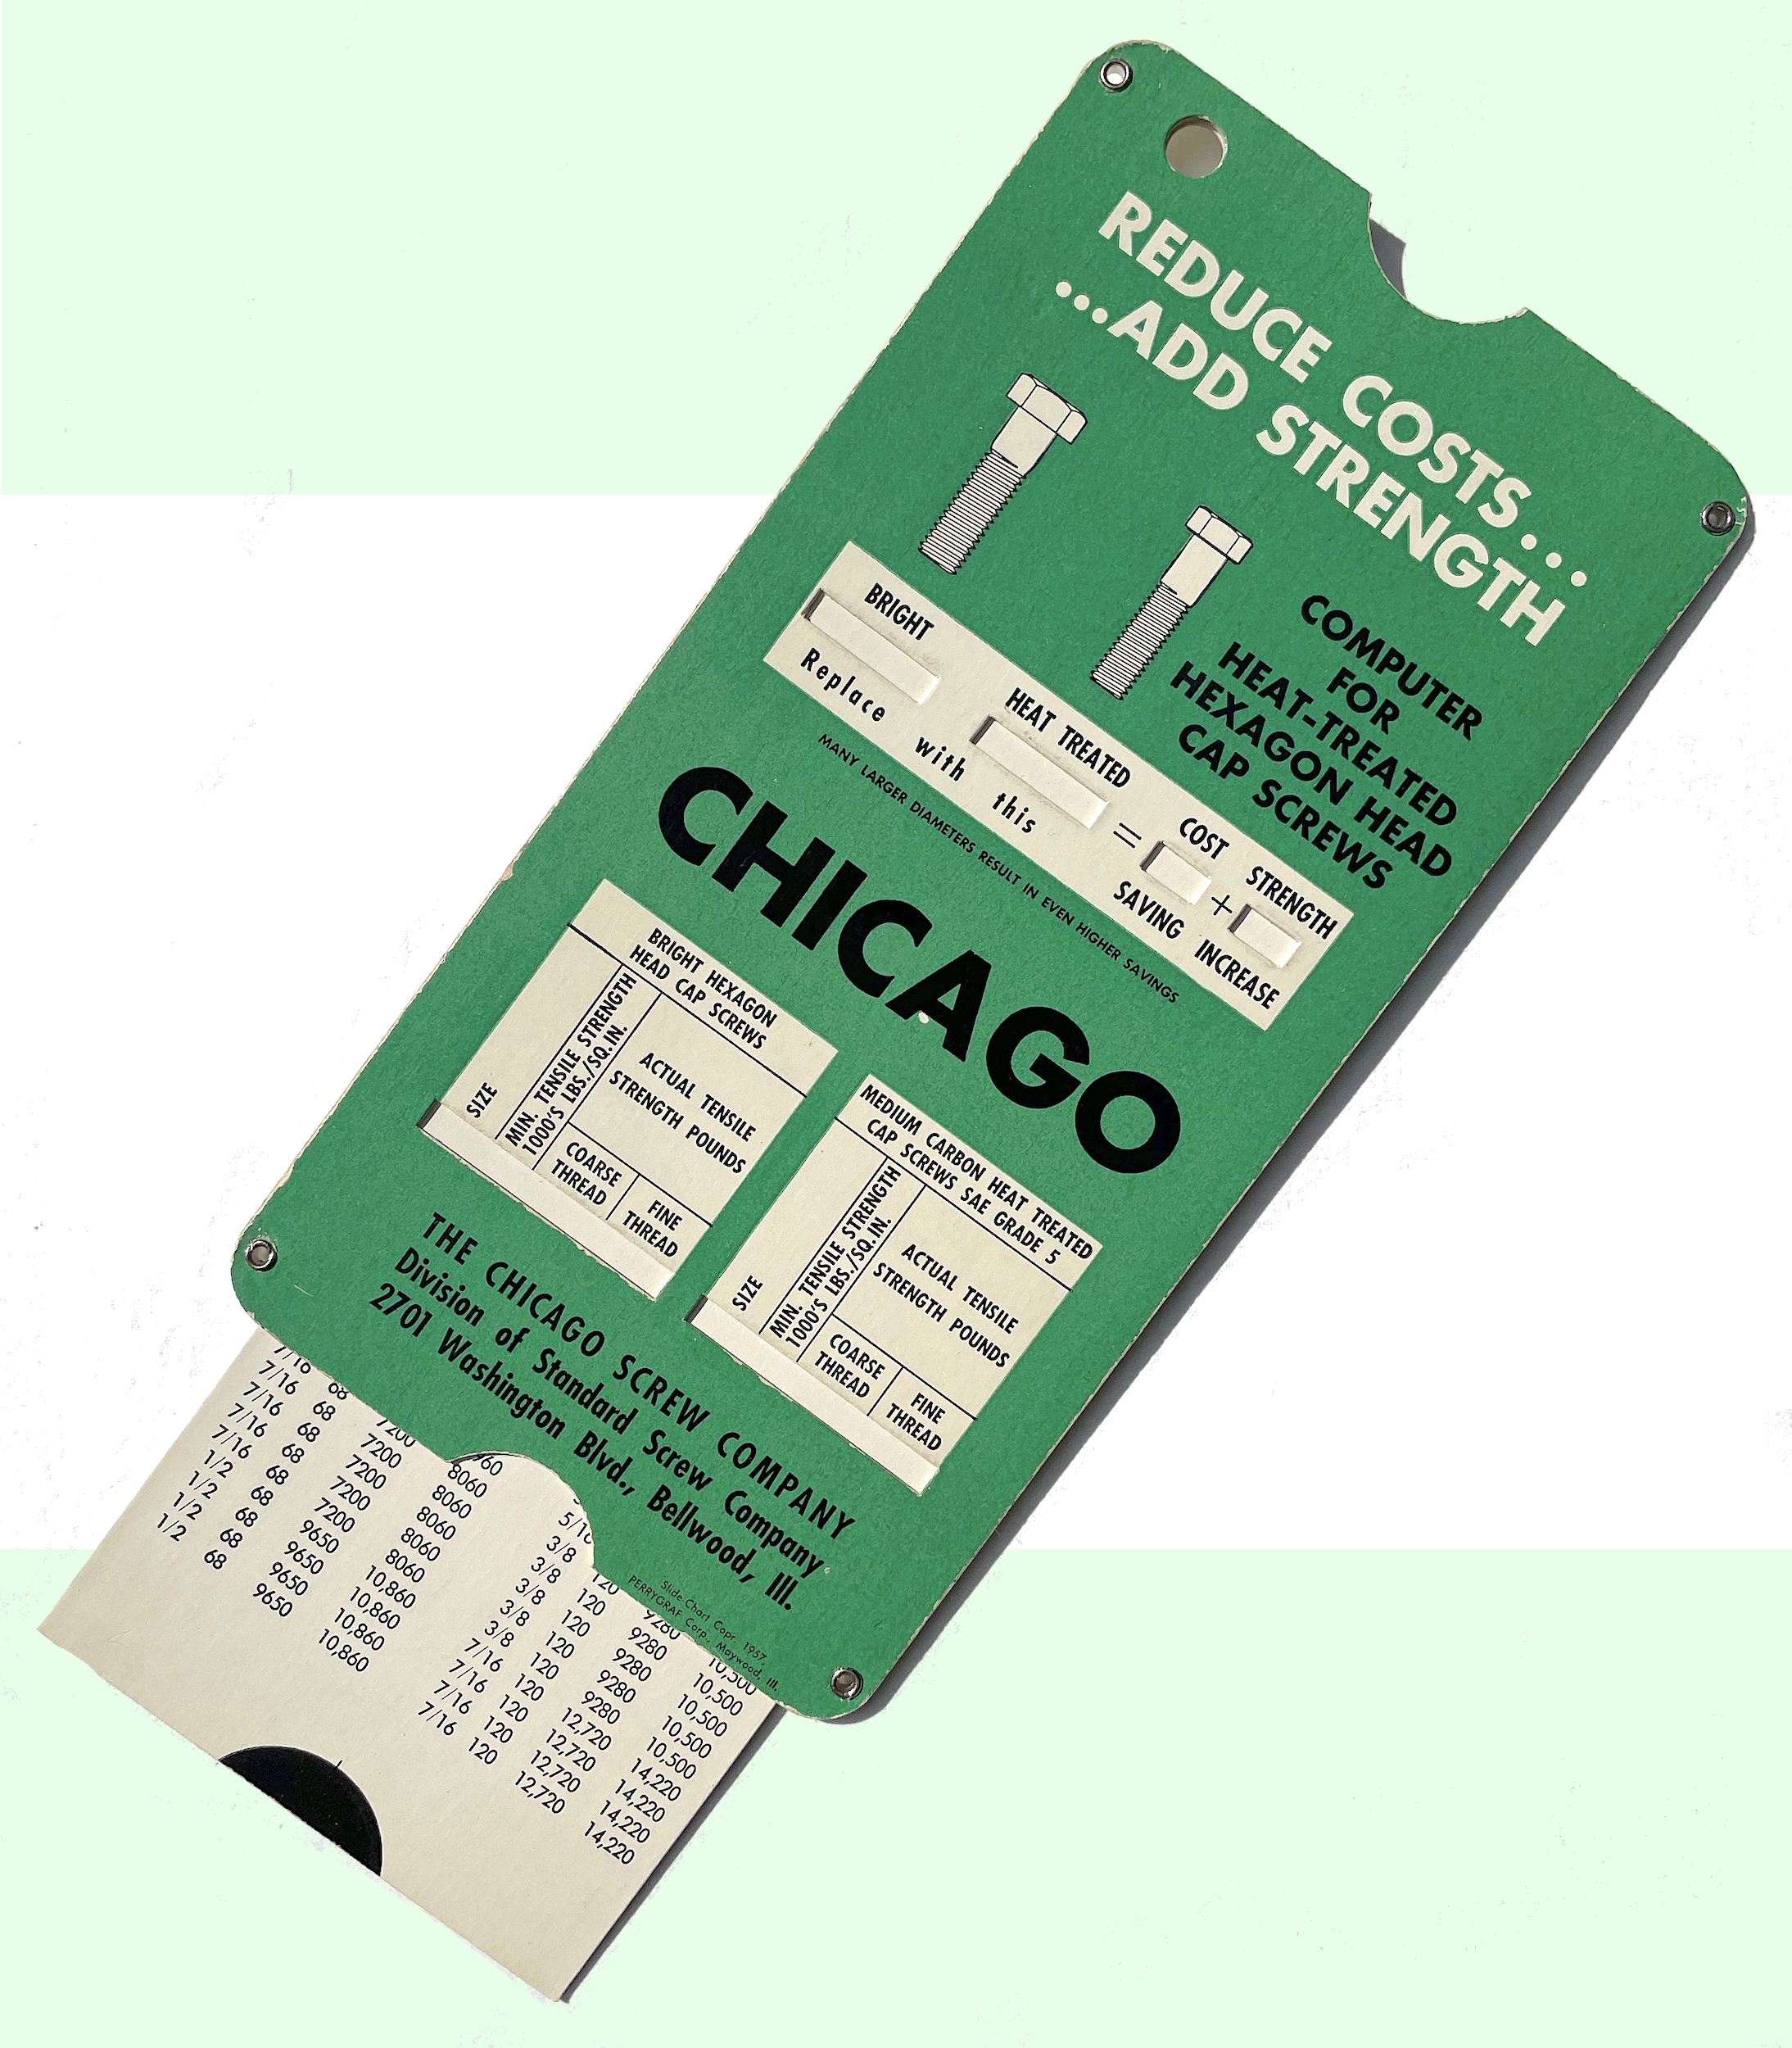 Chicago Screw Company history